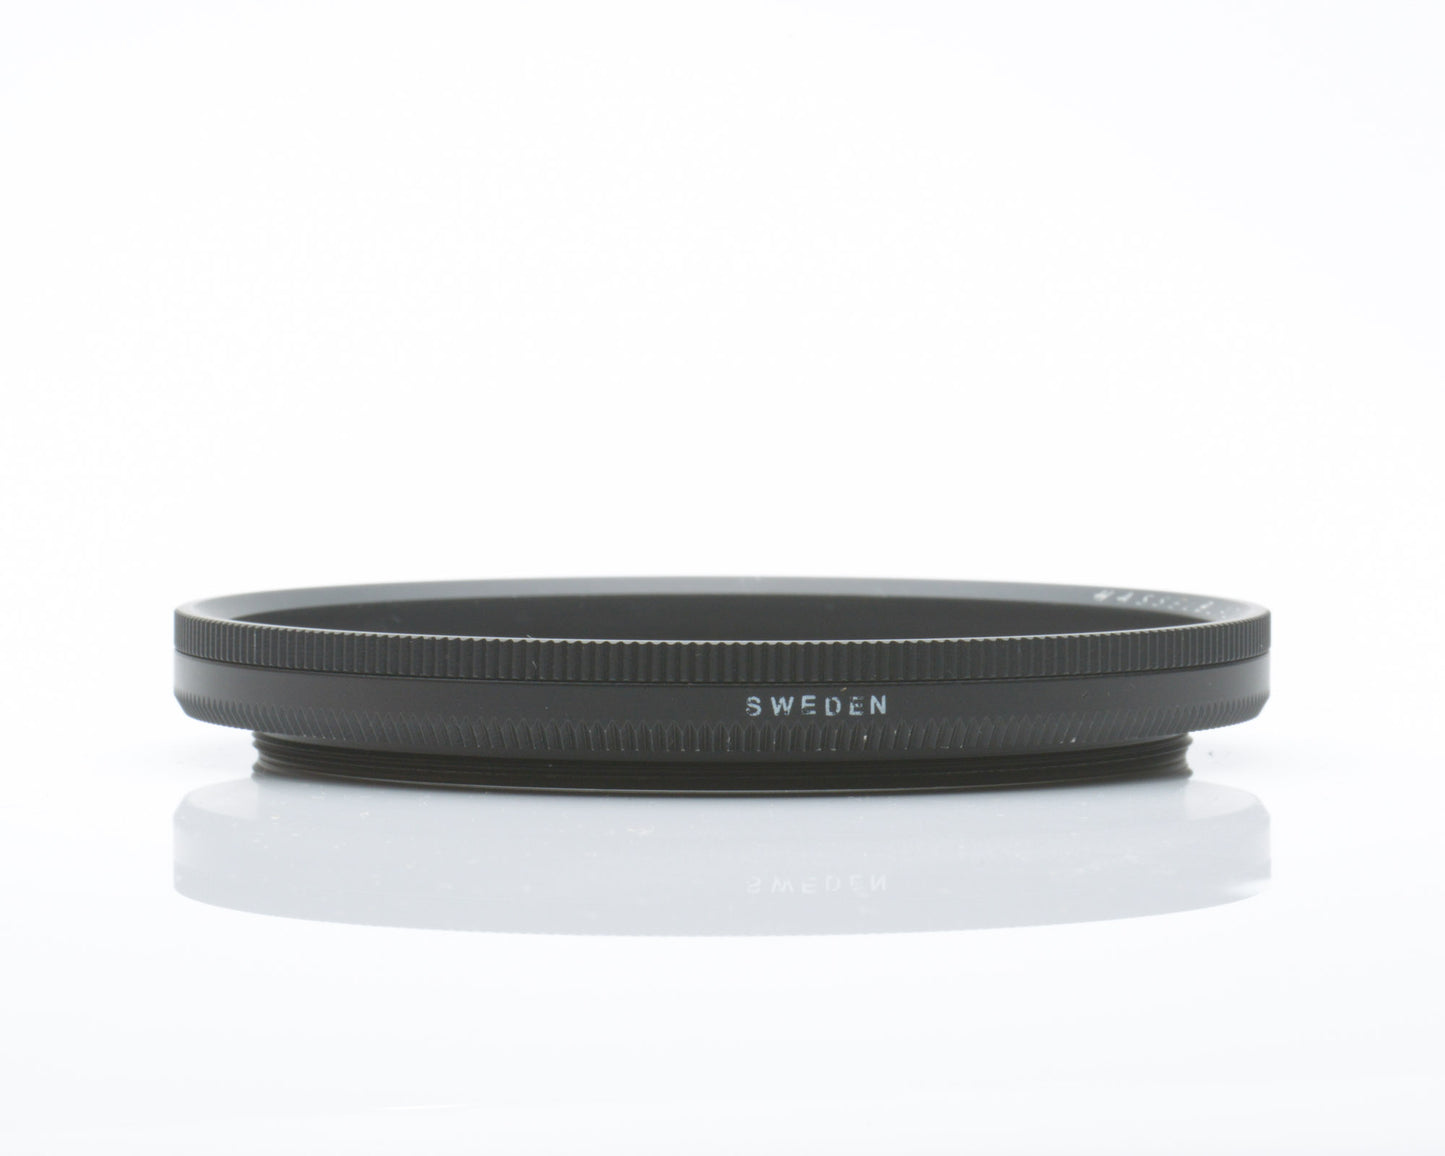 Hasselblad Bay 93 Lens Shade Hood Filter Rings for 40mm CF Lens